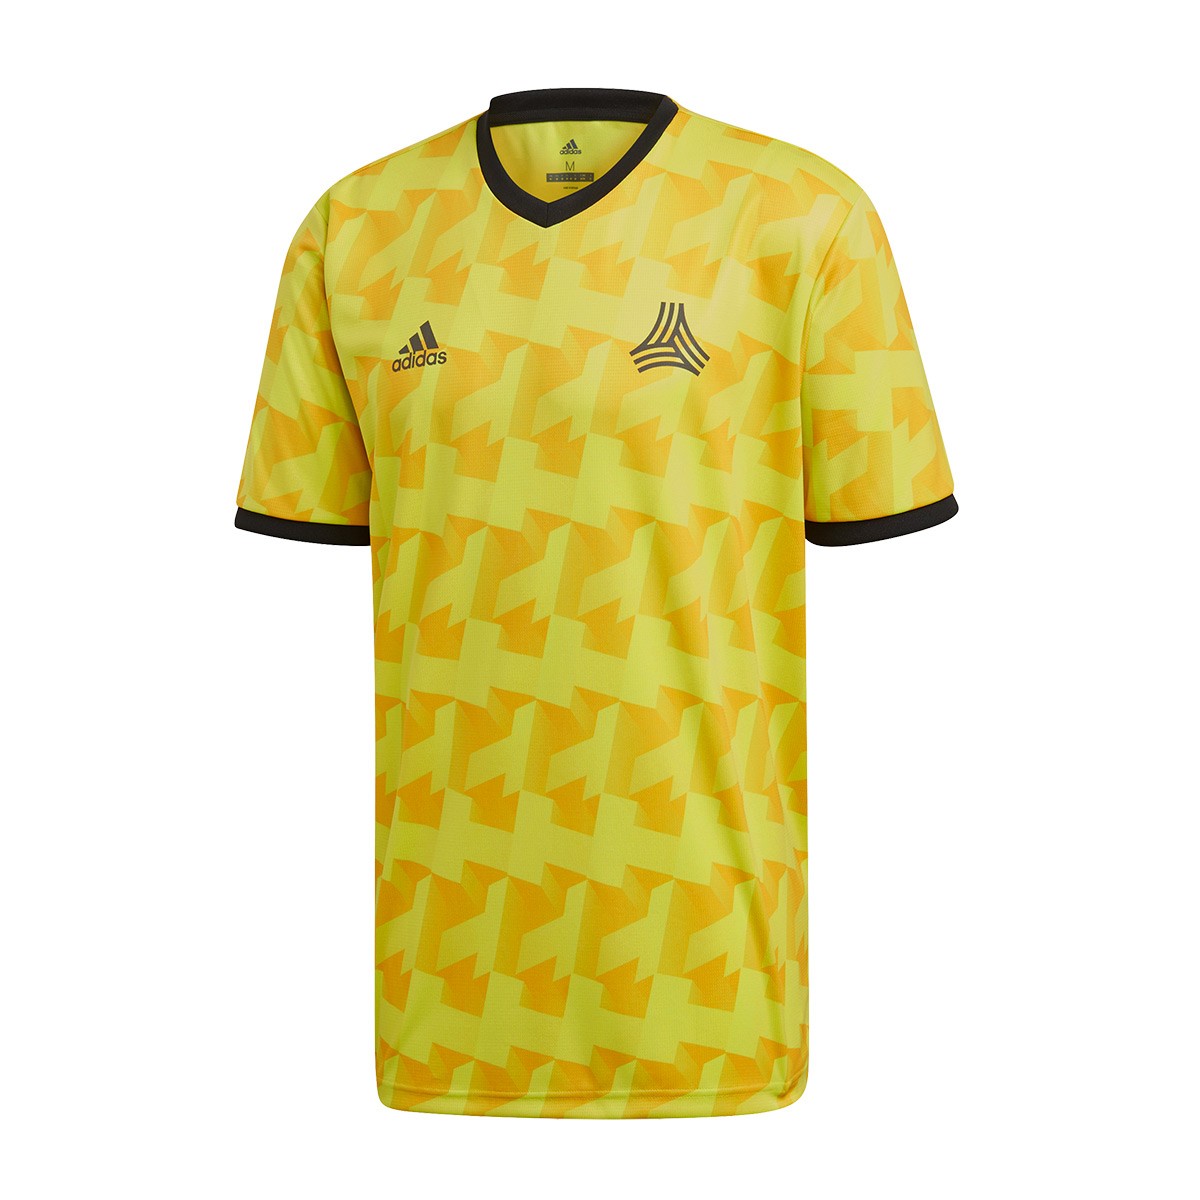 yellow football jersey